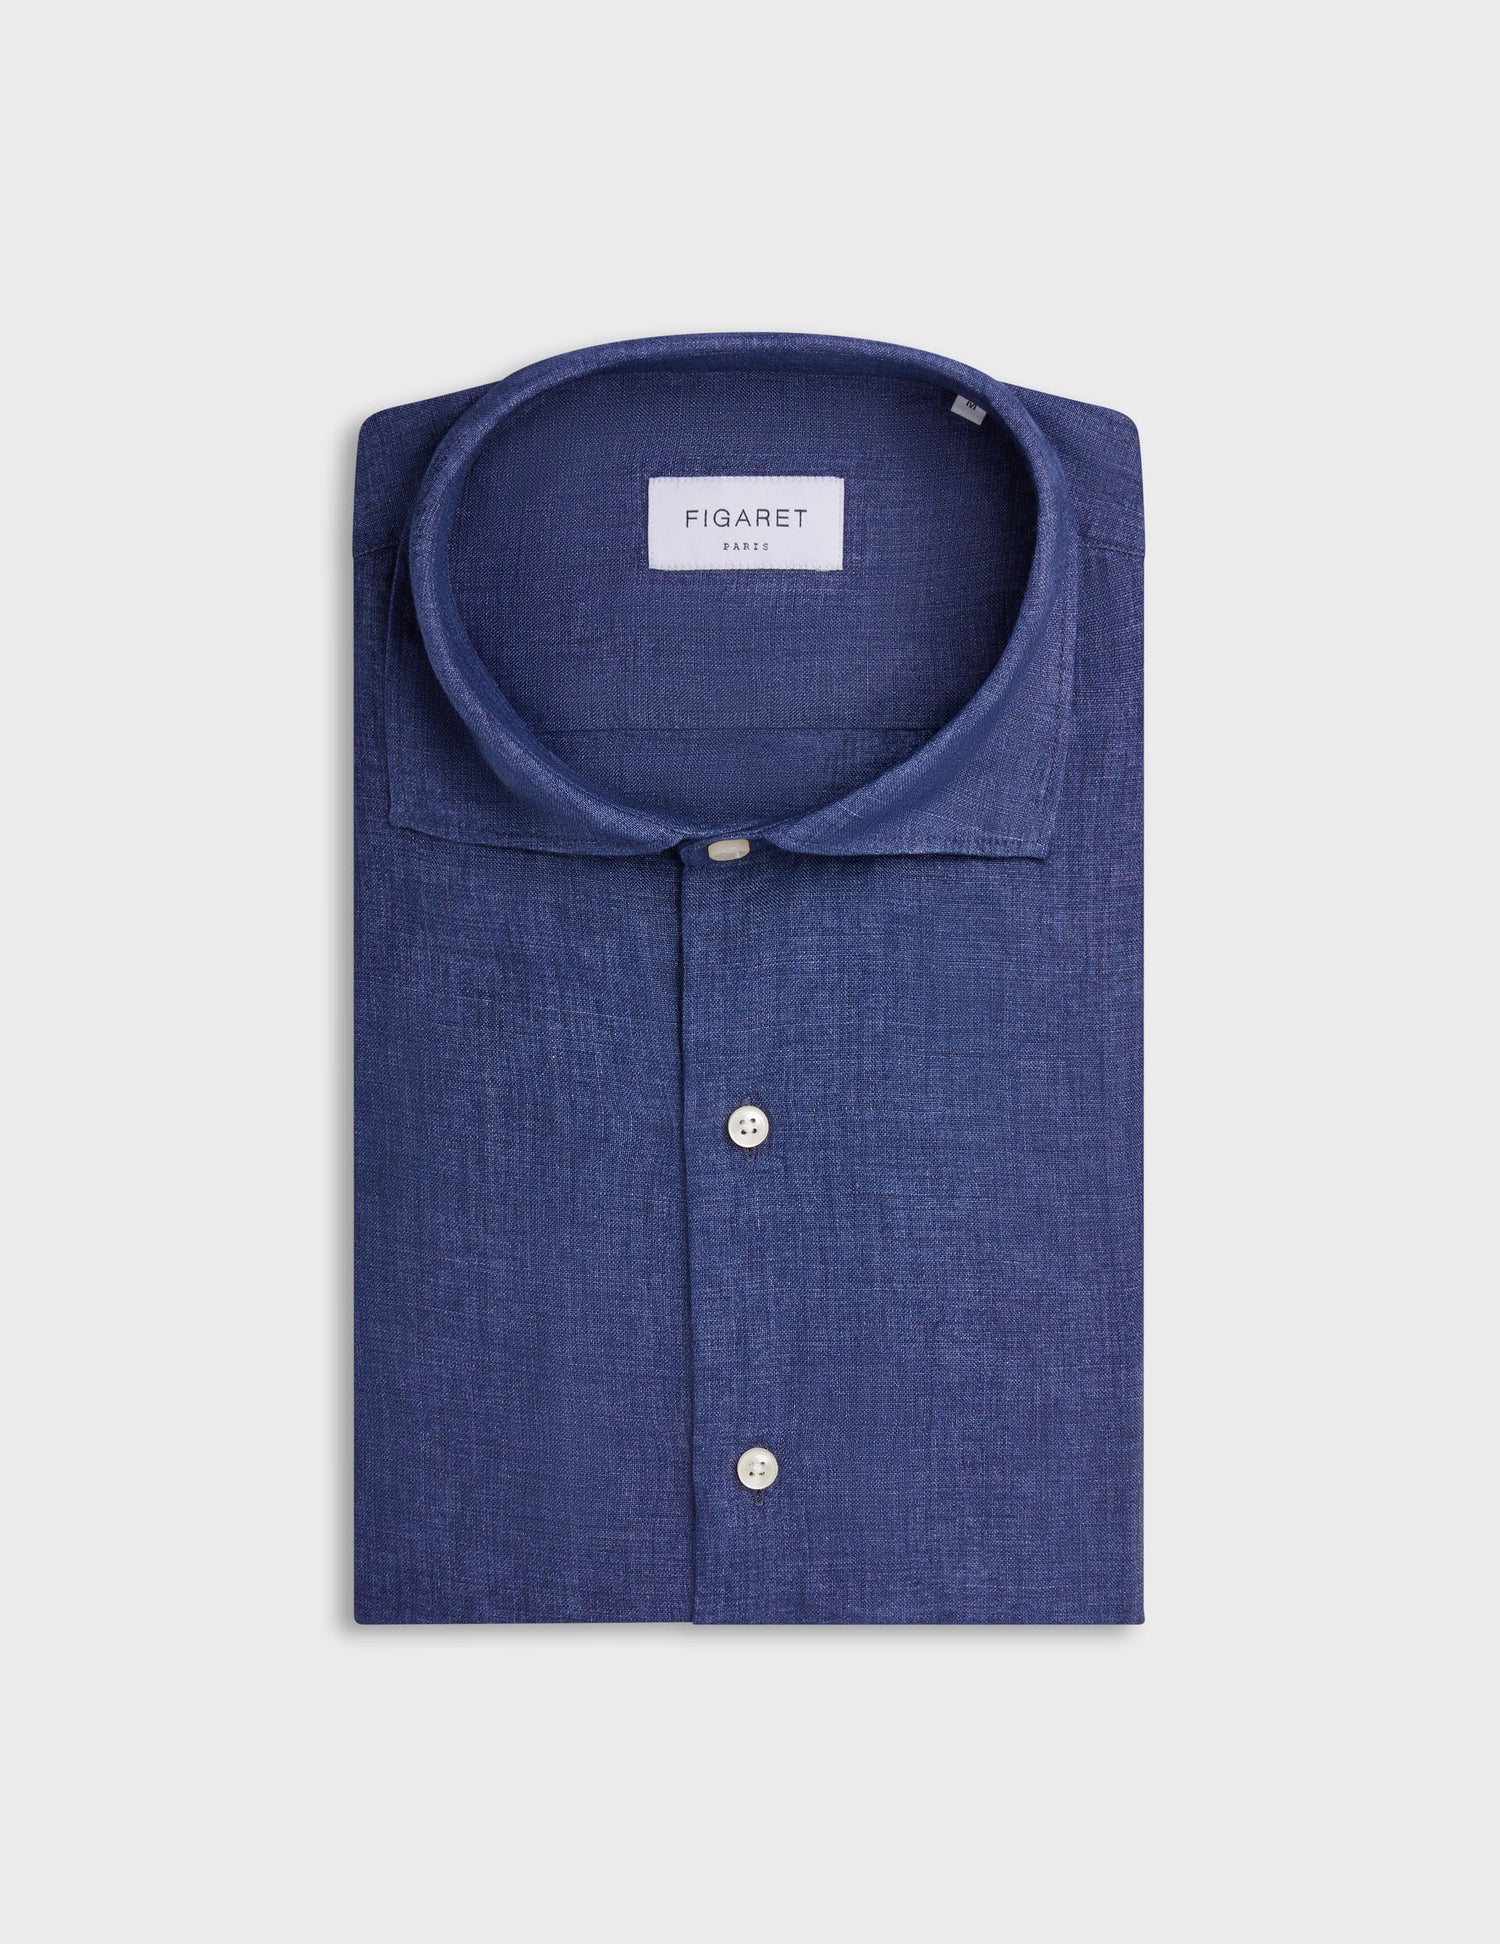 Aristote shirt in dark blue linen - Linen - Italian Collar#4